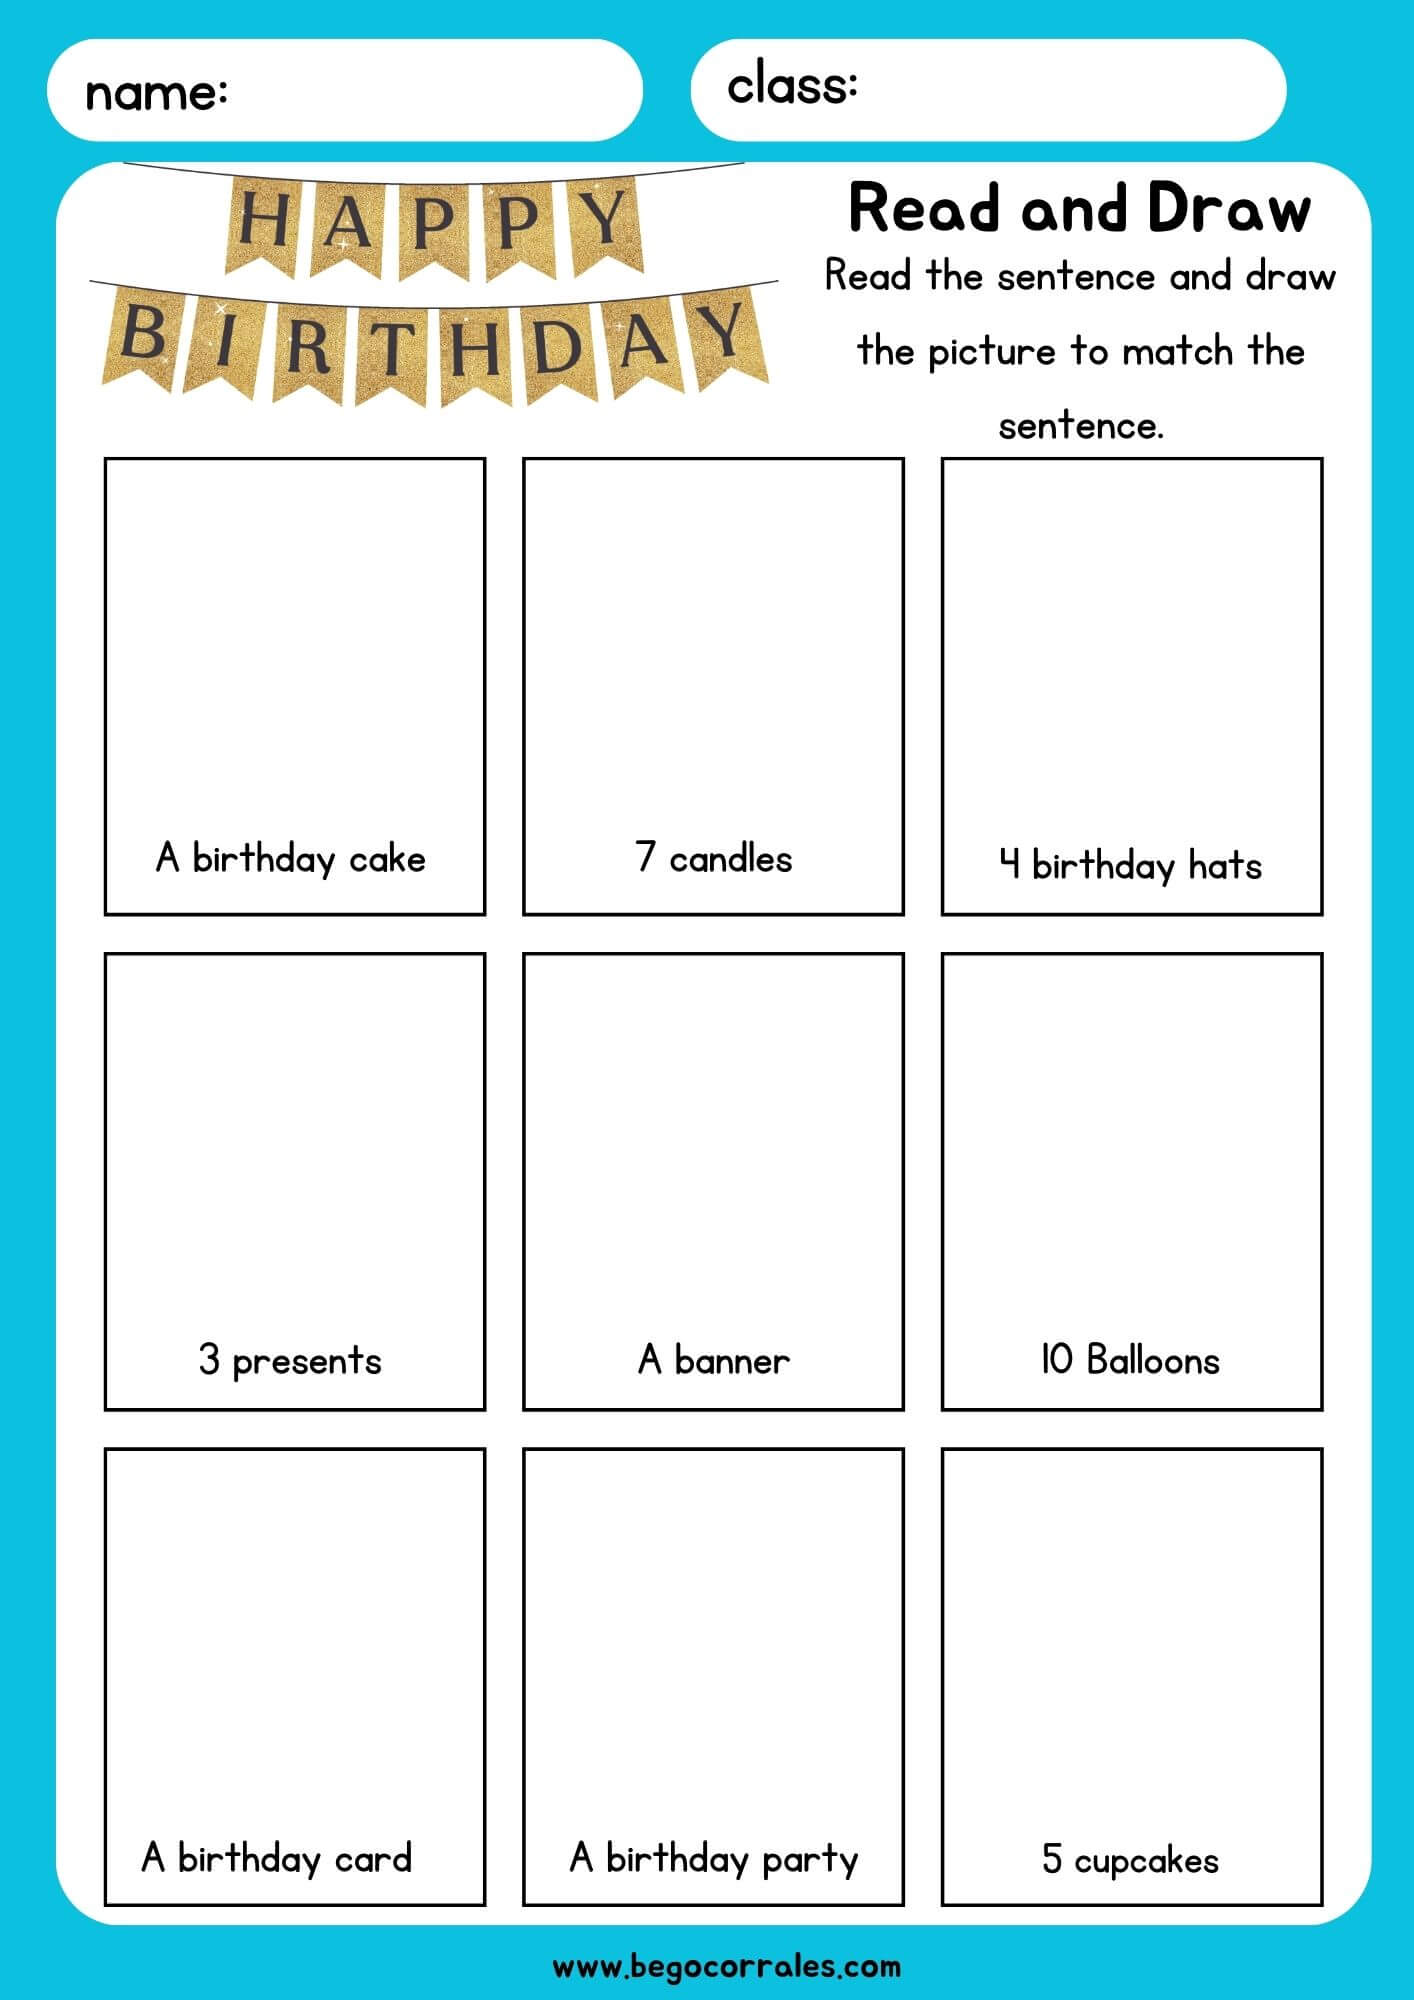 Birthday vocabulary - read and draw